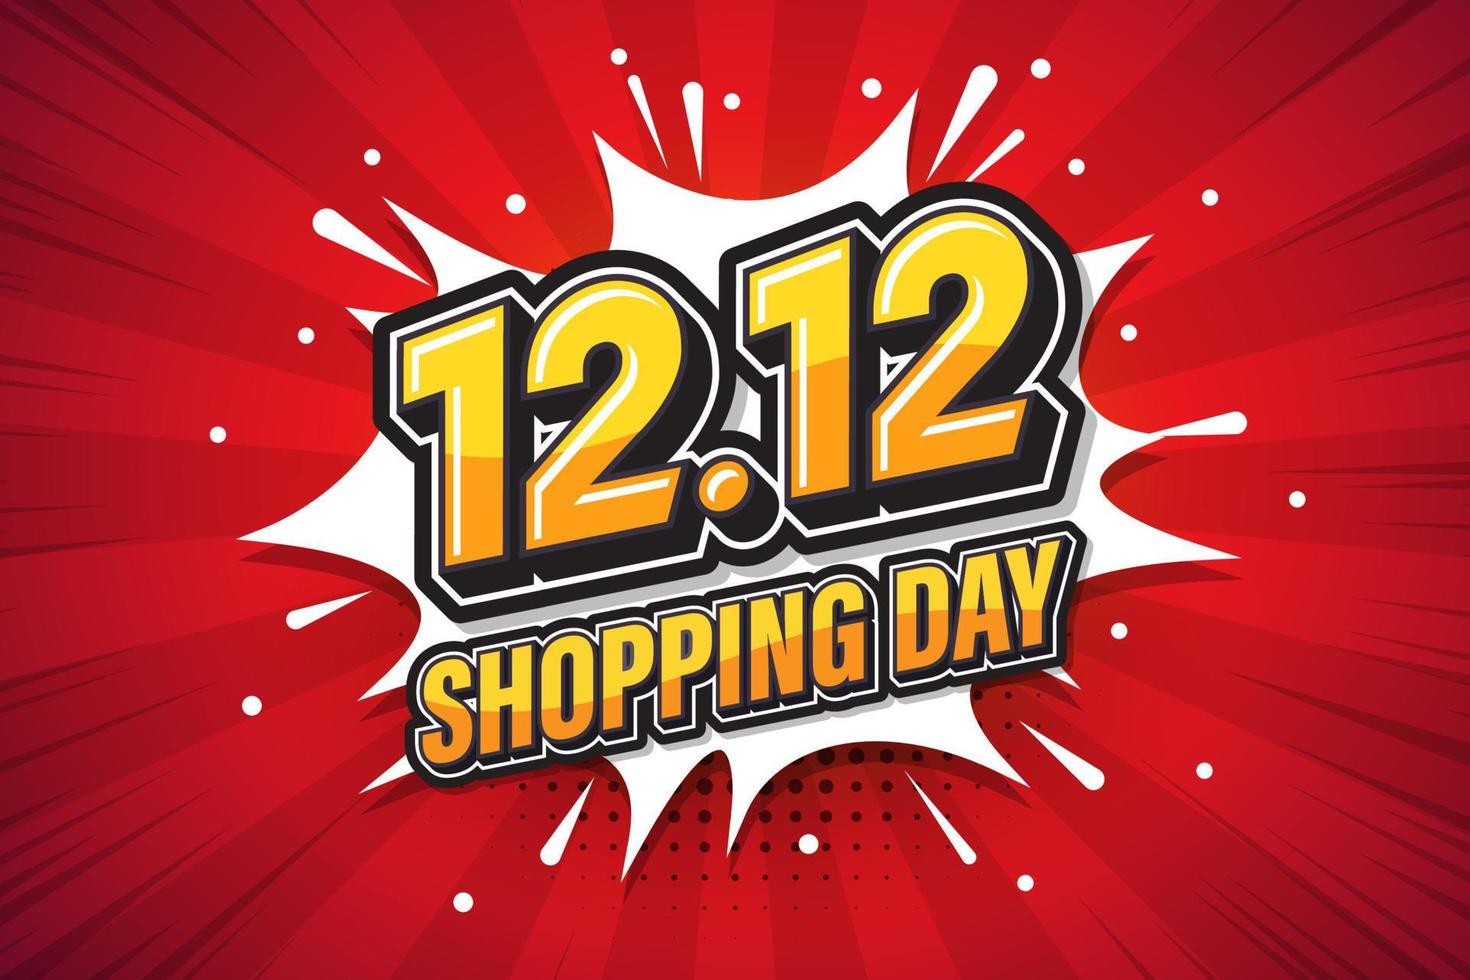 12.12 Shopping day font expression pop art comic speech bubble. Vector illustration